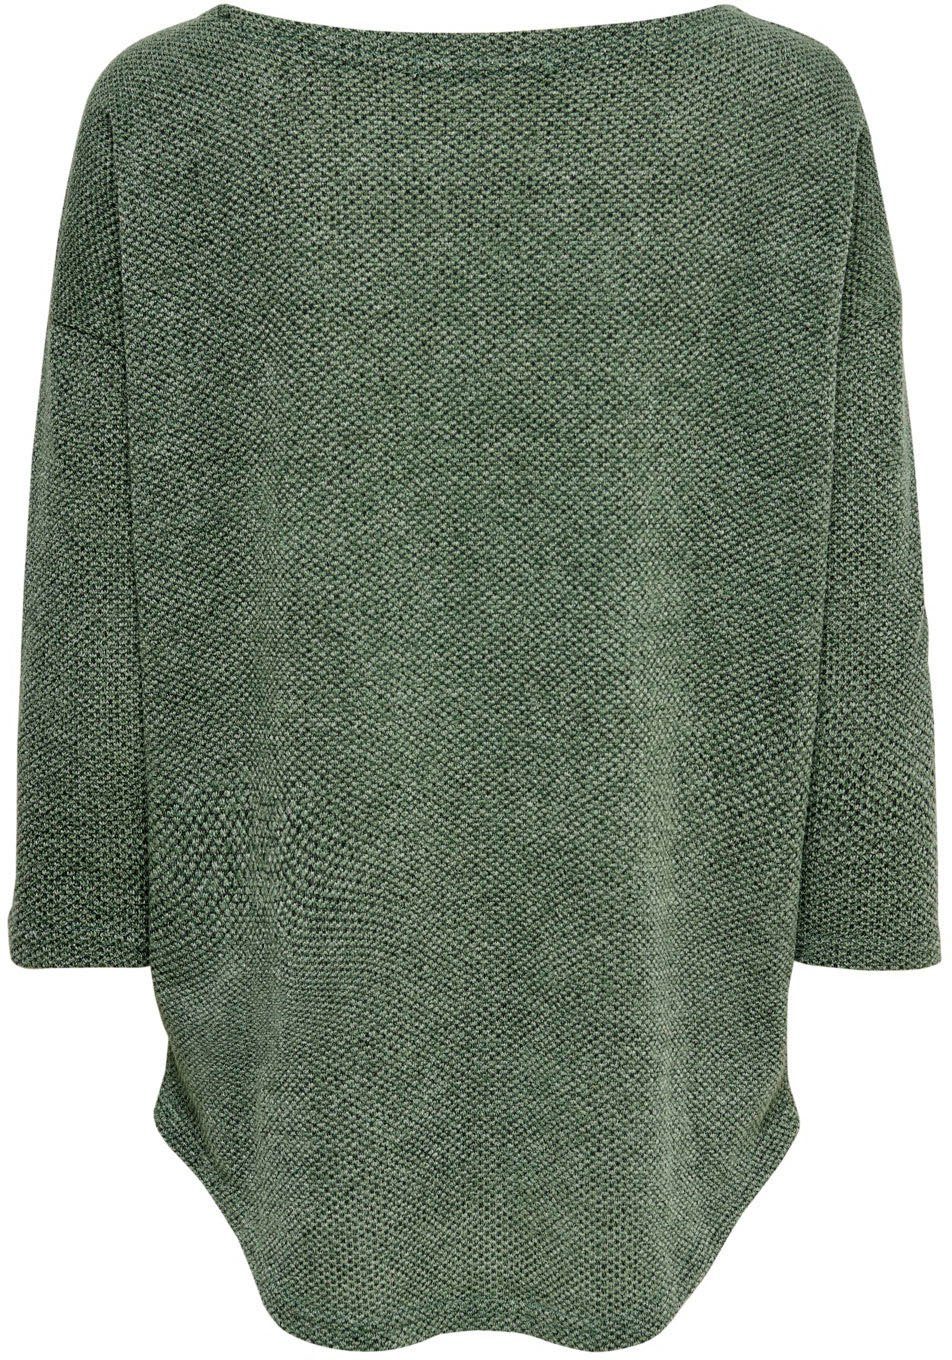 ONLALBA ONLY graugrün 3/4-Arm-Shirt